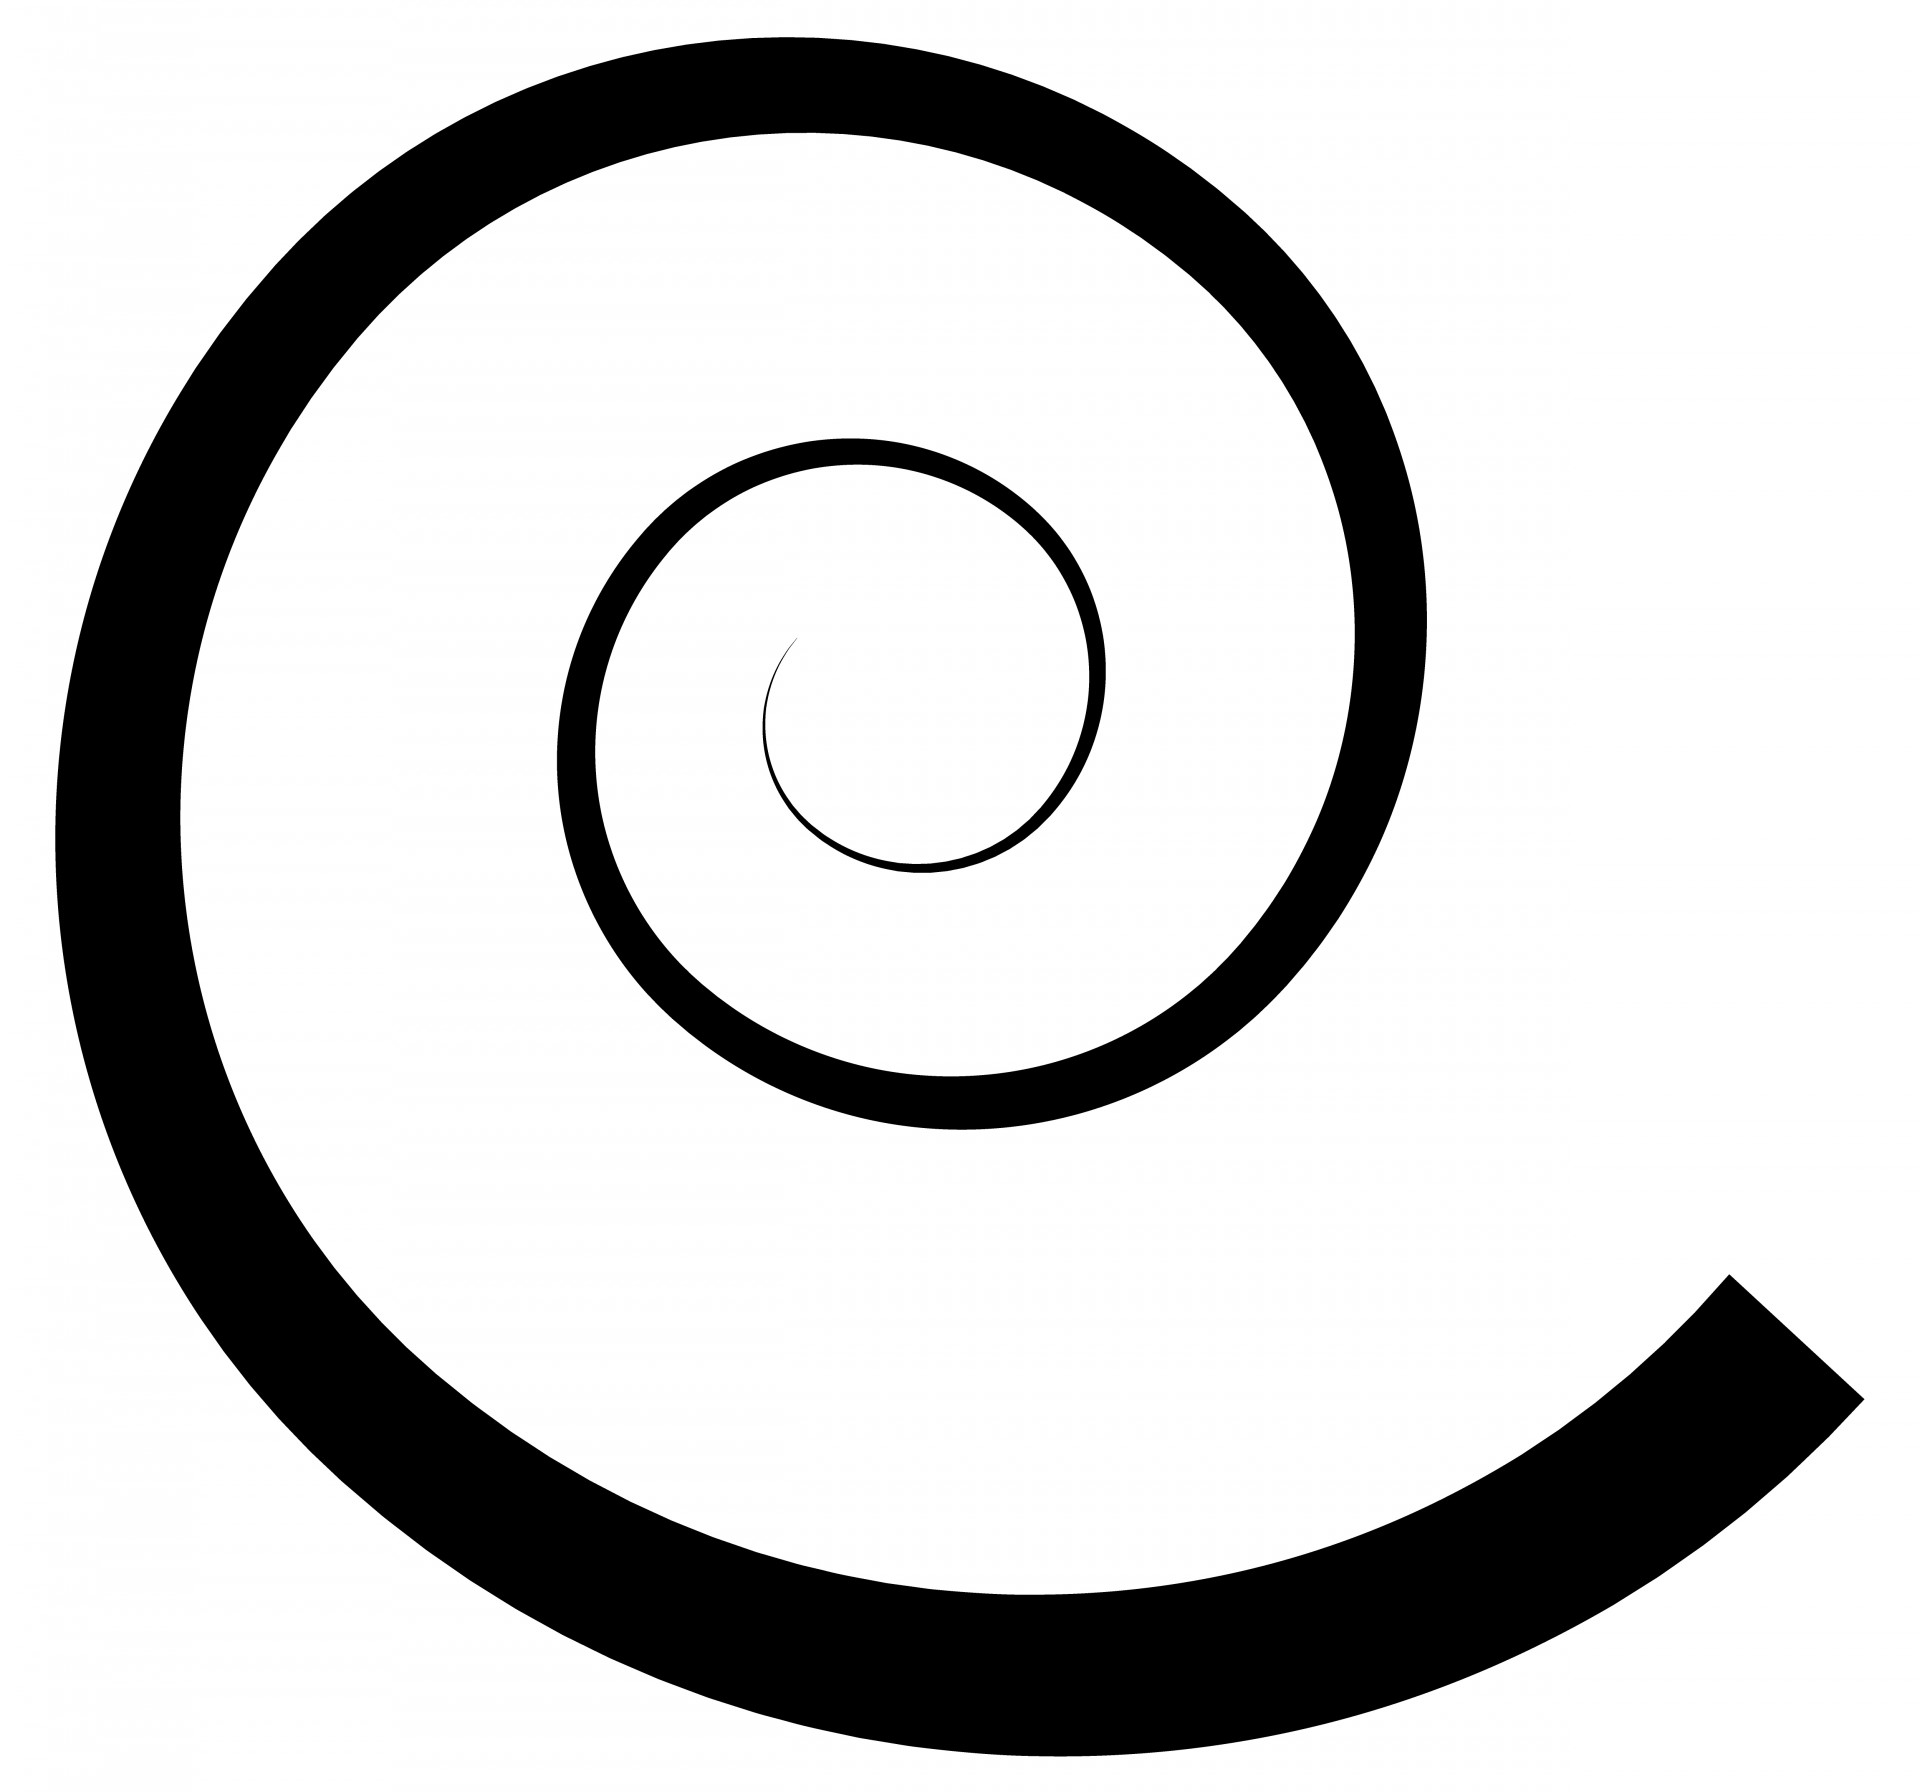 Silhouette of a spiral, swirl design element